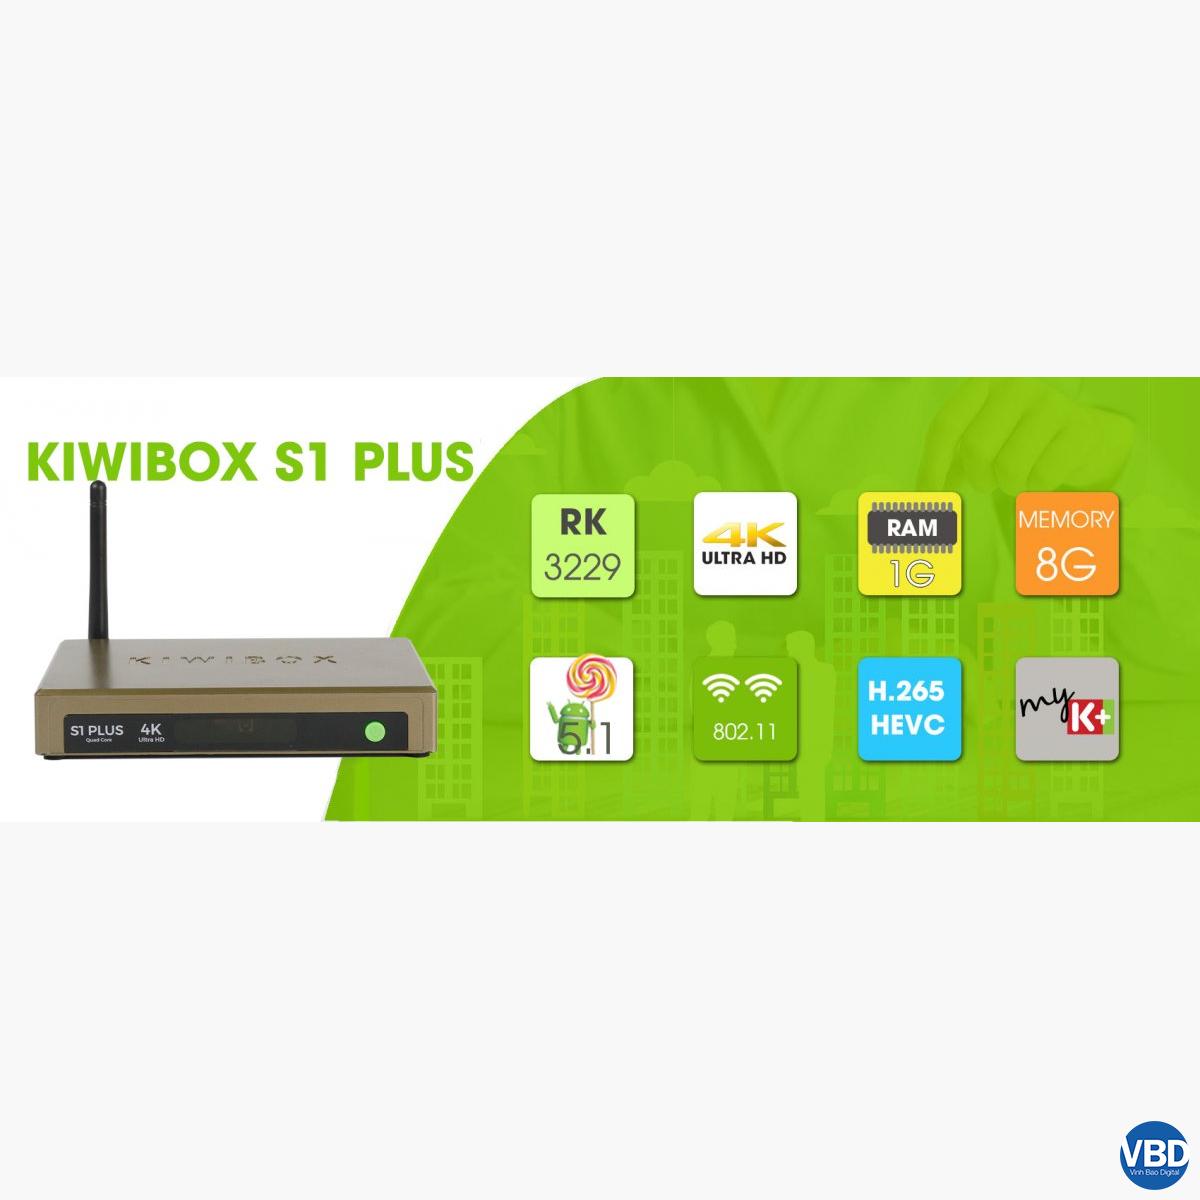 5Kiwibox S1 Plus